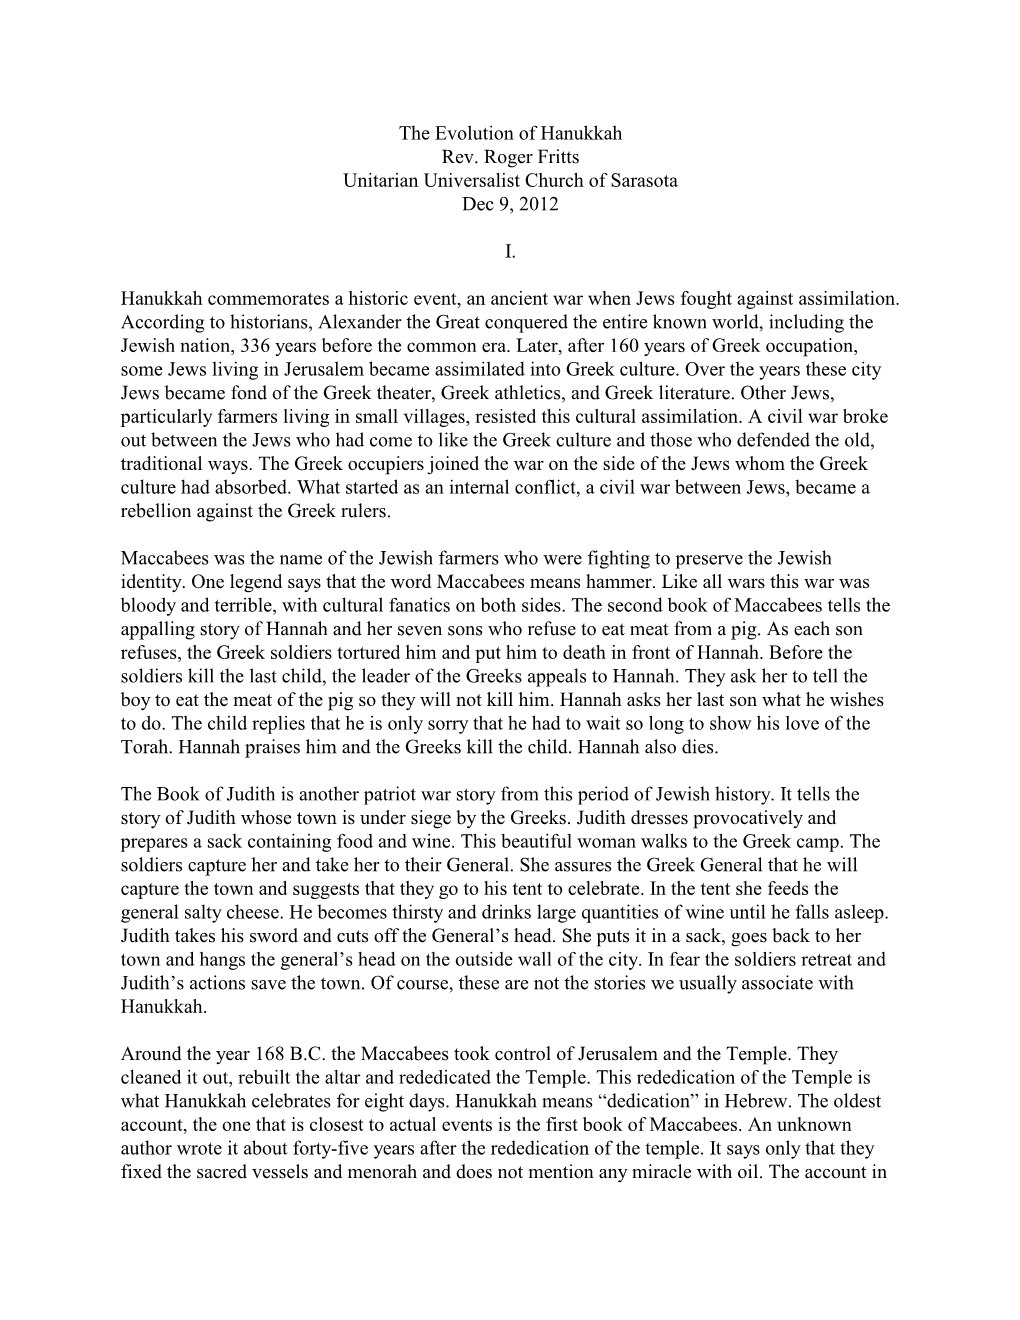 The Evolution of Hanukkah Rev. Roger Fritts Unitarian Universalist Church of Sarasota Dec 9, 2012 I. Hanukkah Commemorates A